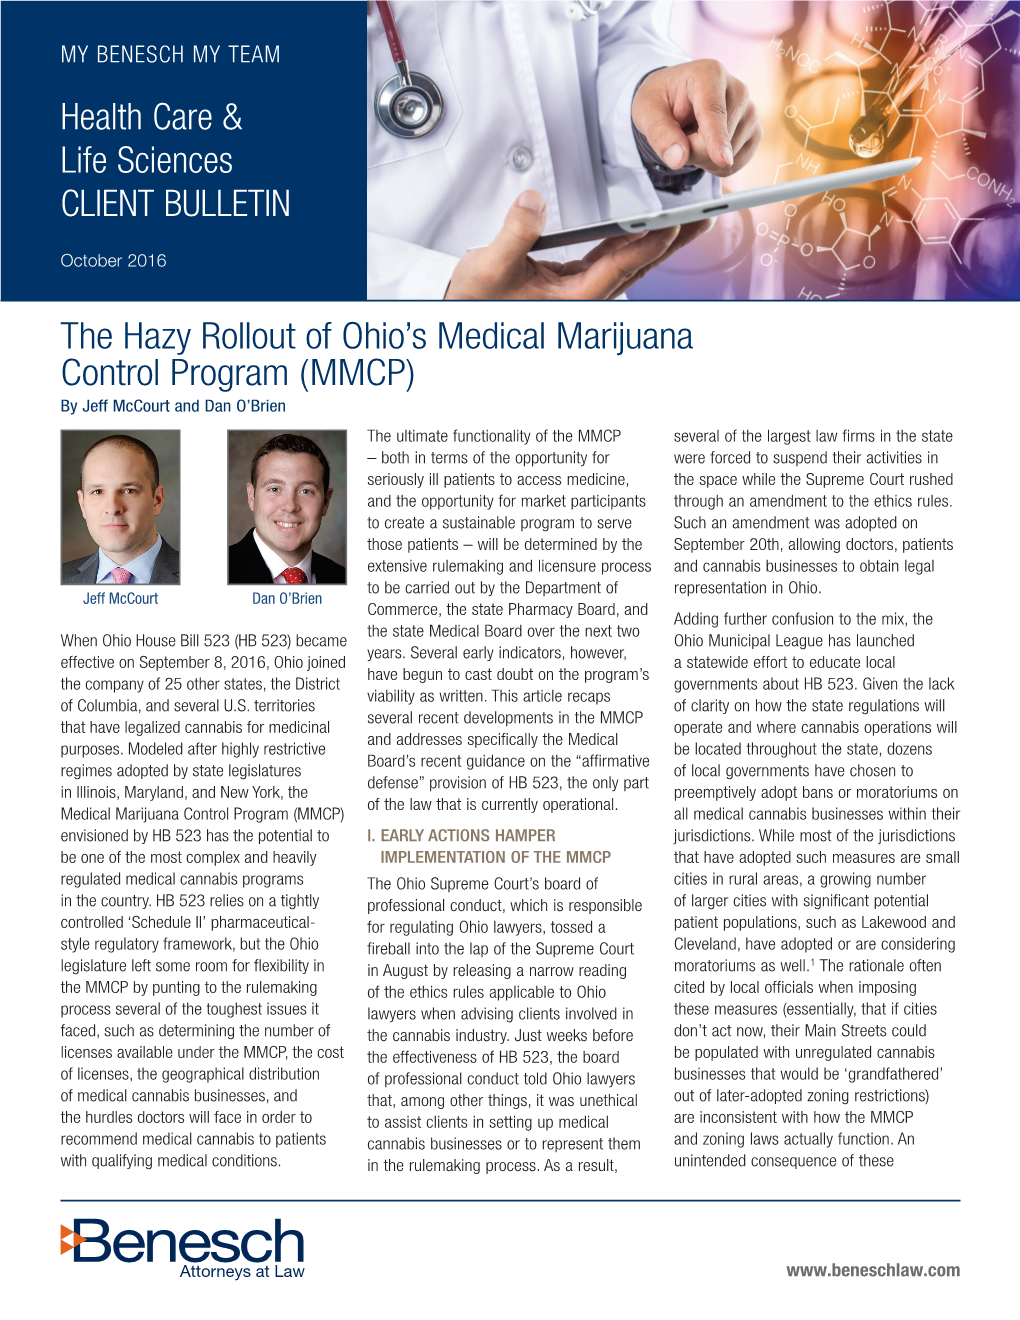 The Hazy Rollout of Ohio's Medical Marijuana Control Program (MMCP